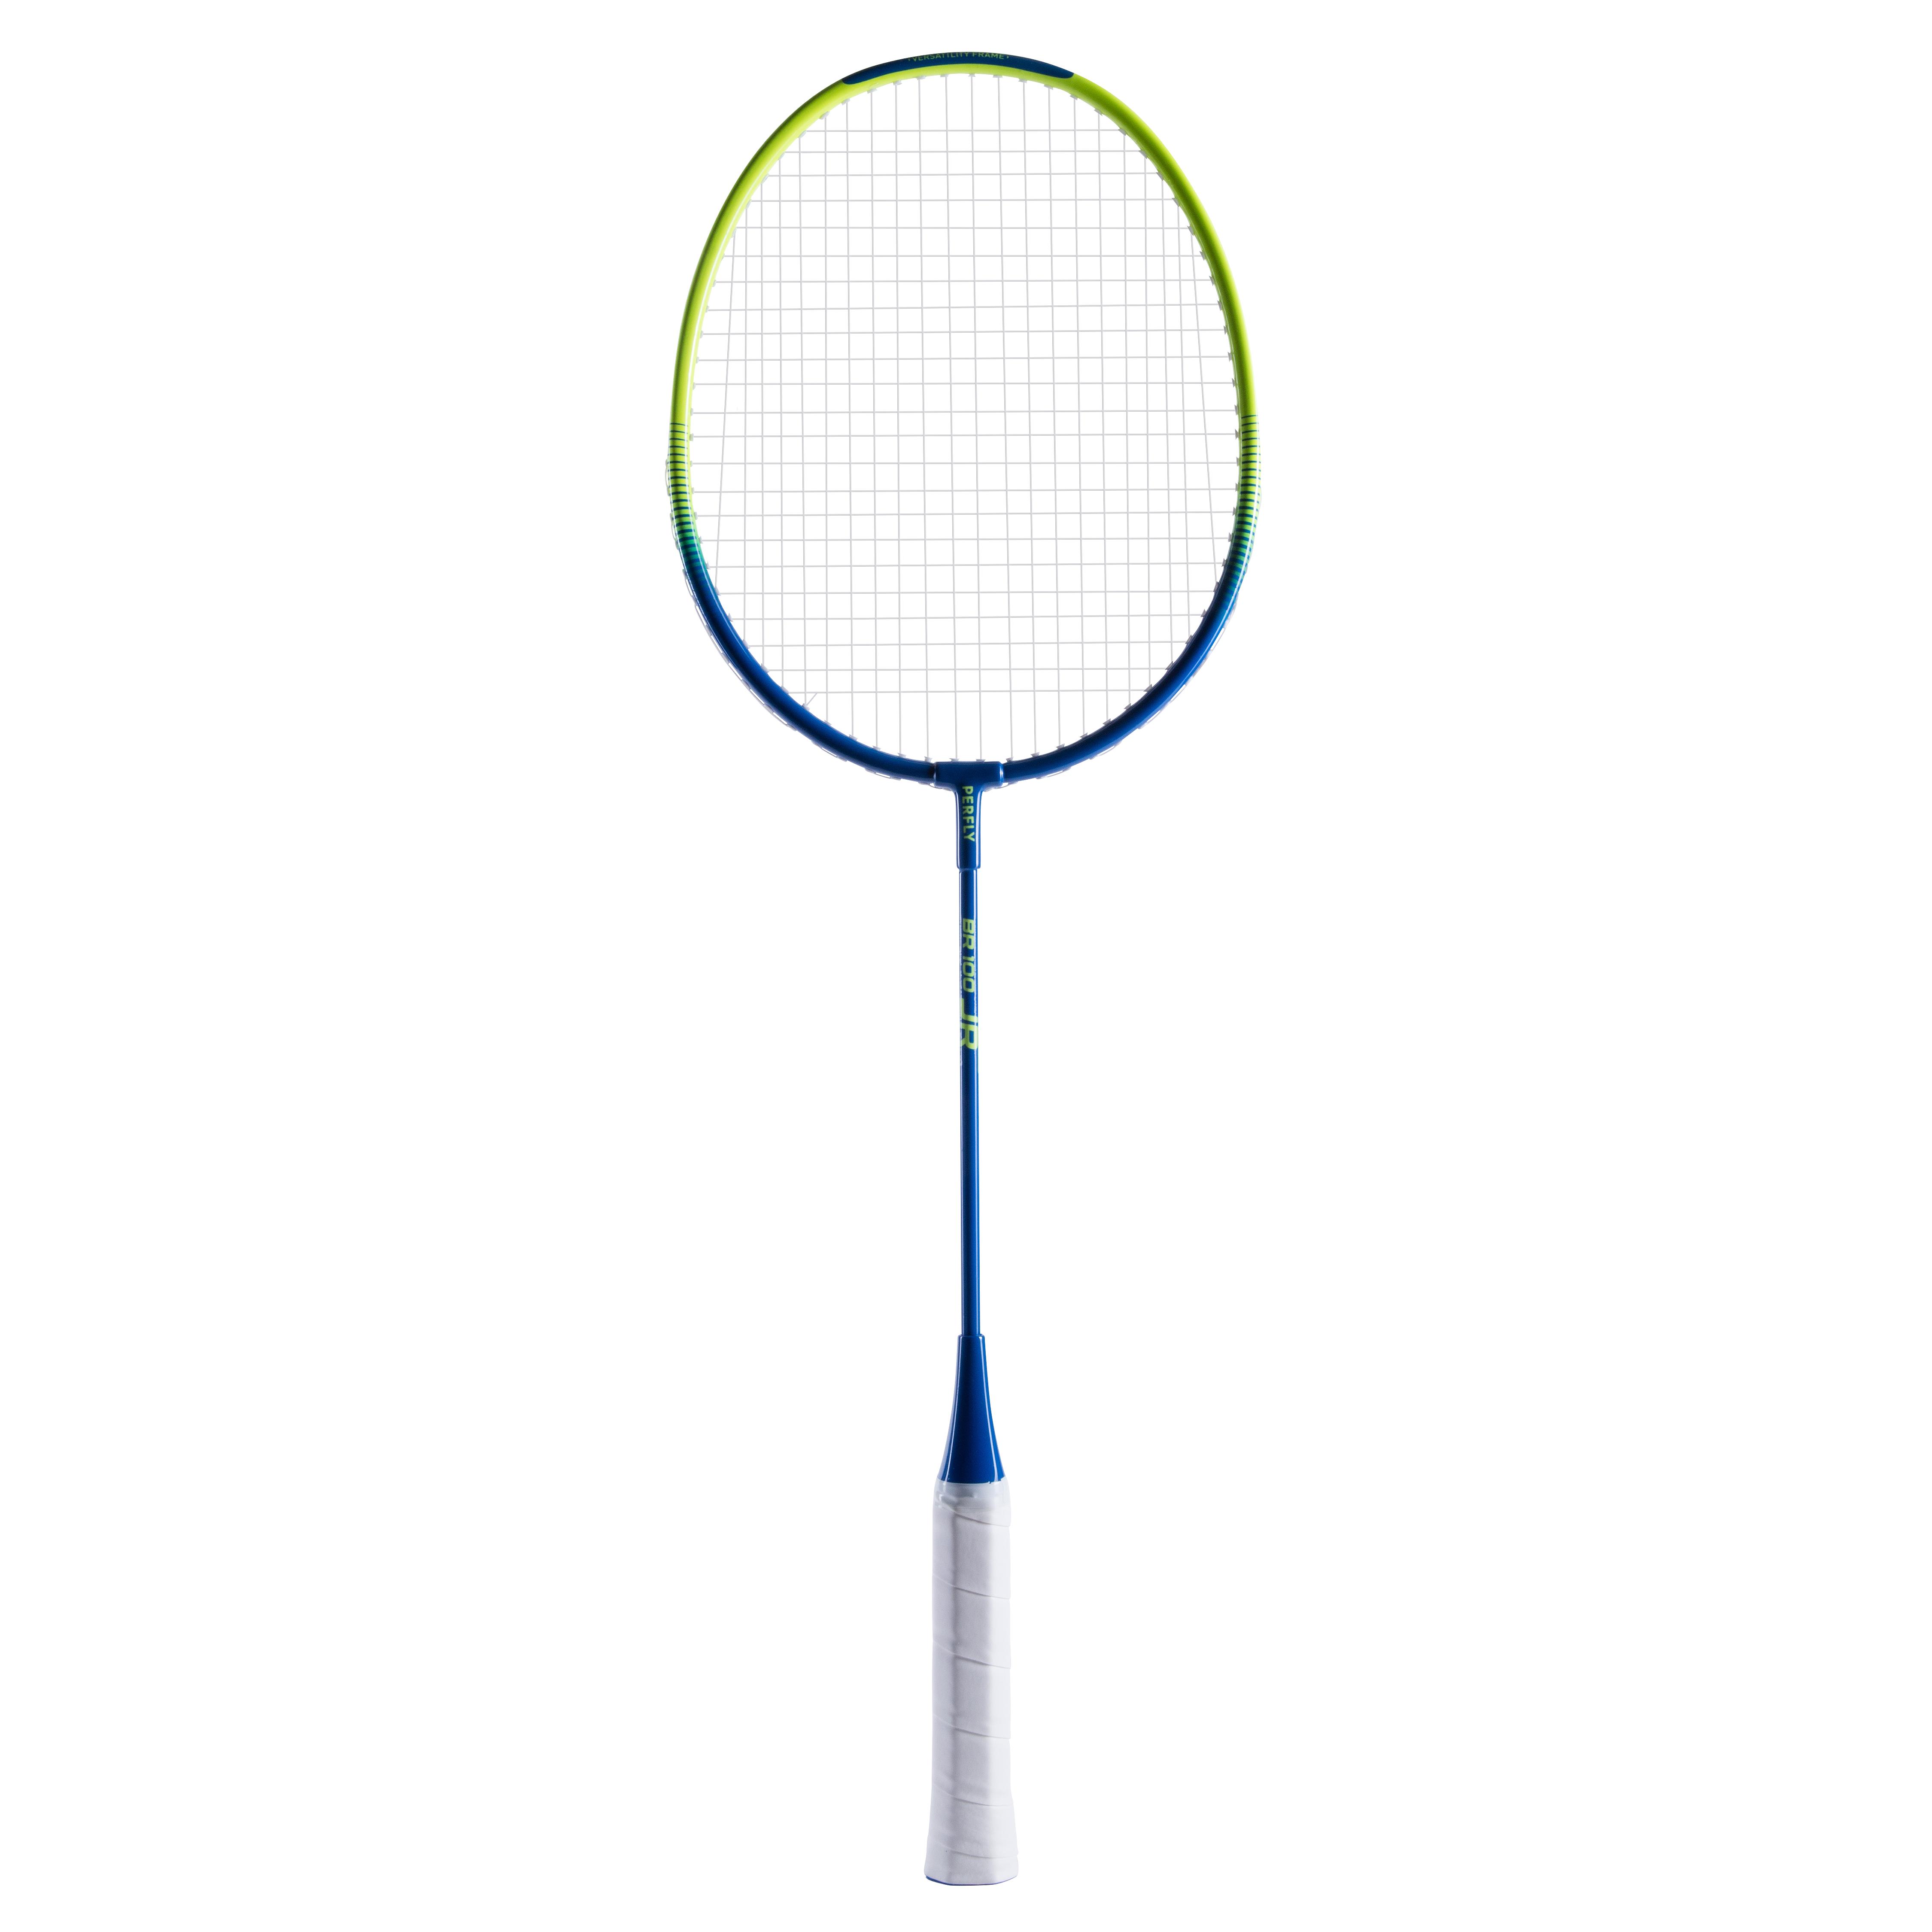 decathlon badminton racket grip